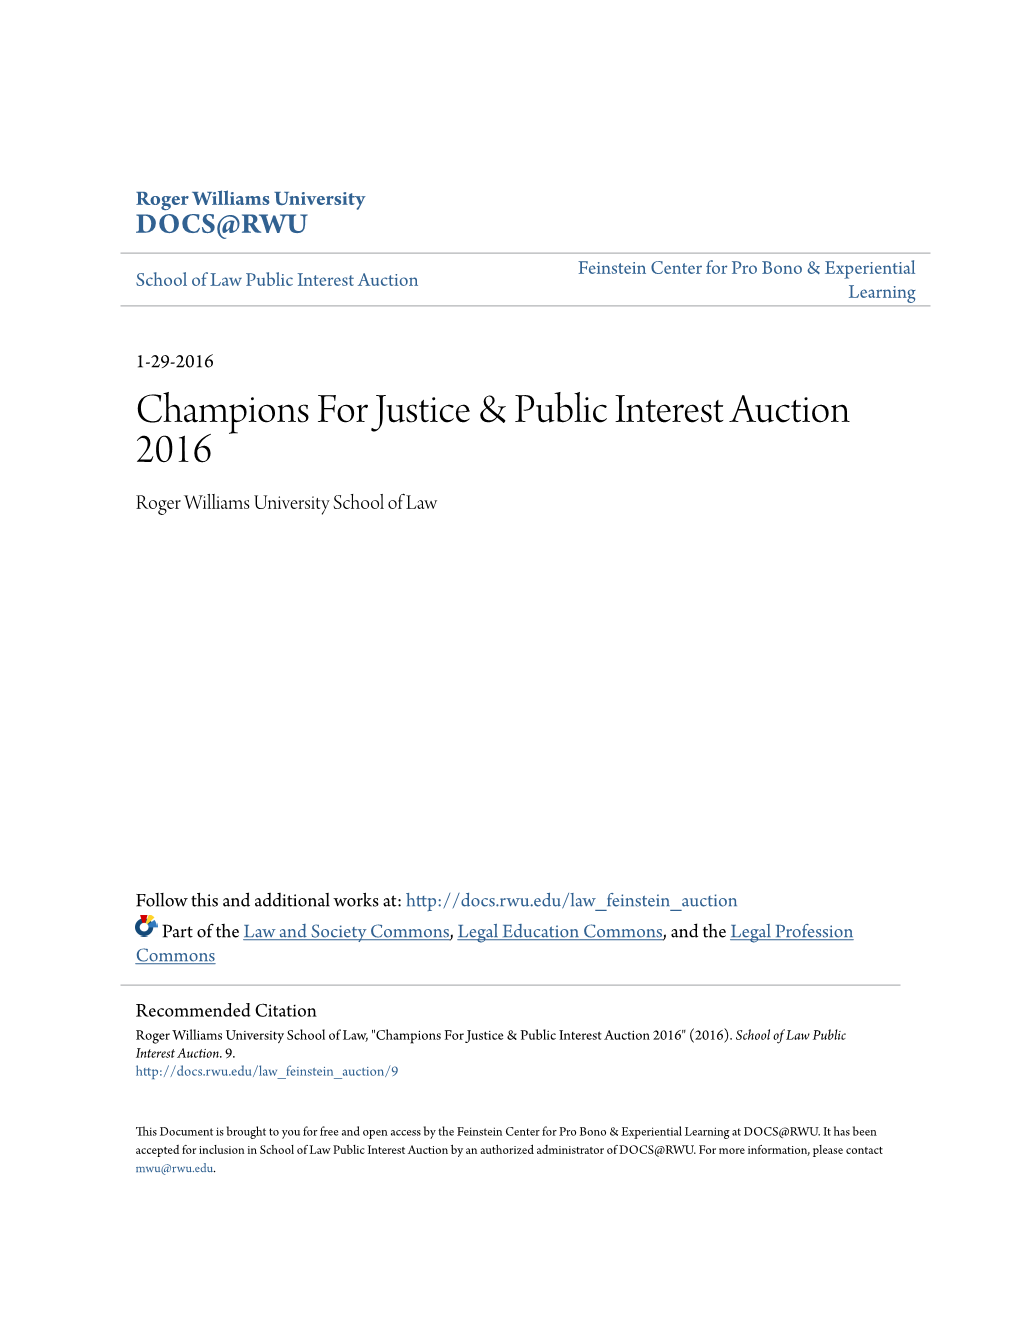 Champions for Justice & Public Interest Auction 2016